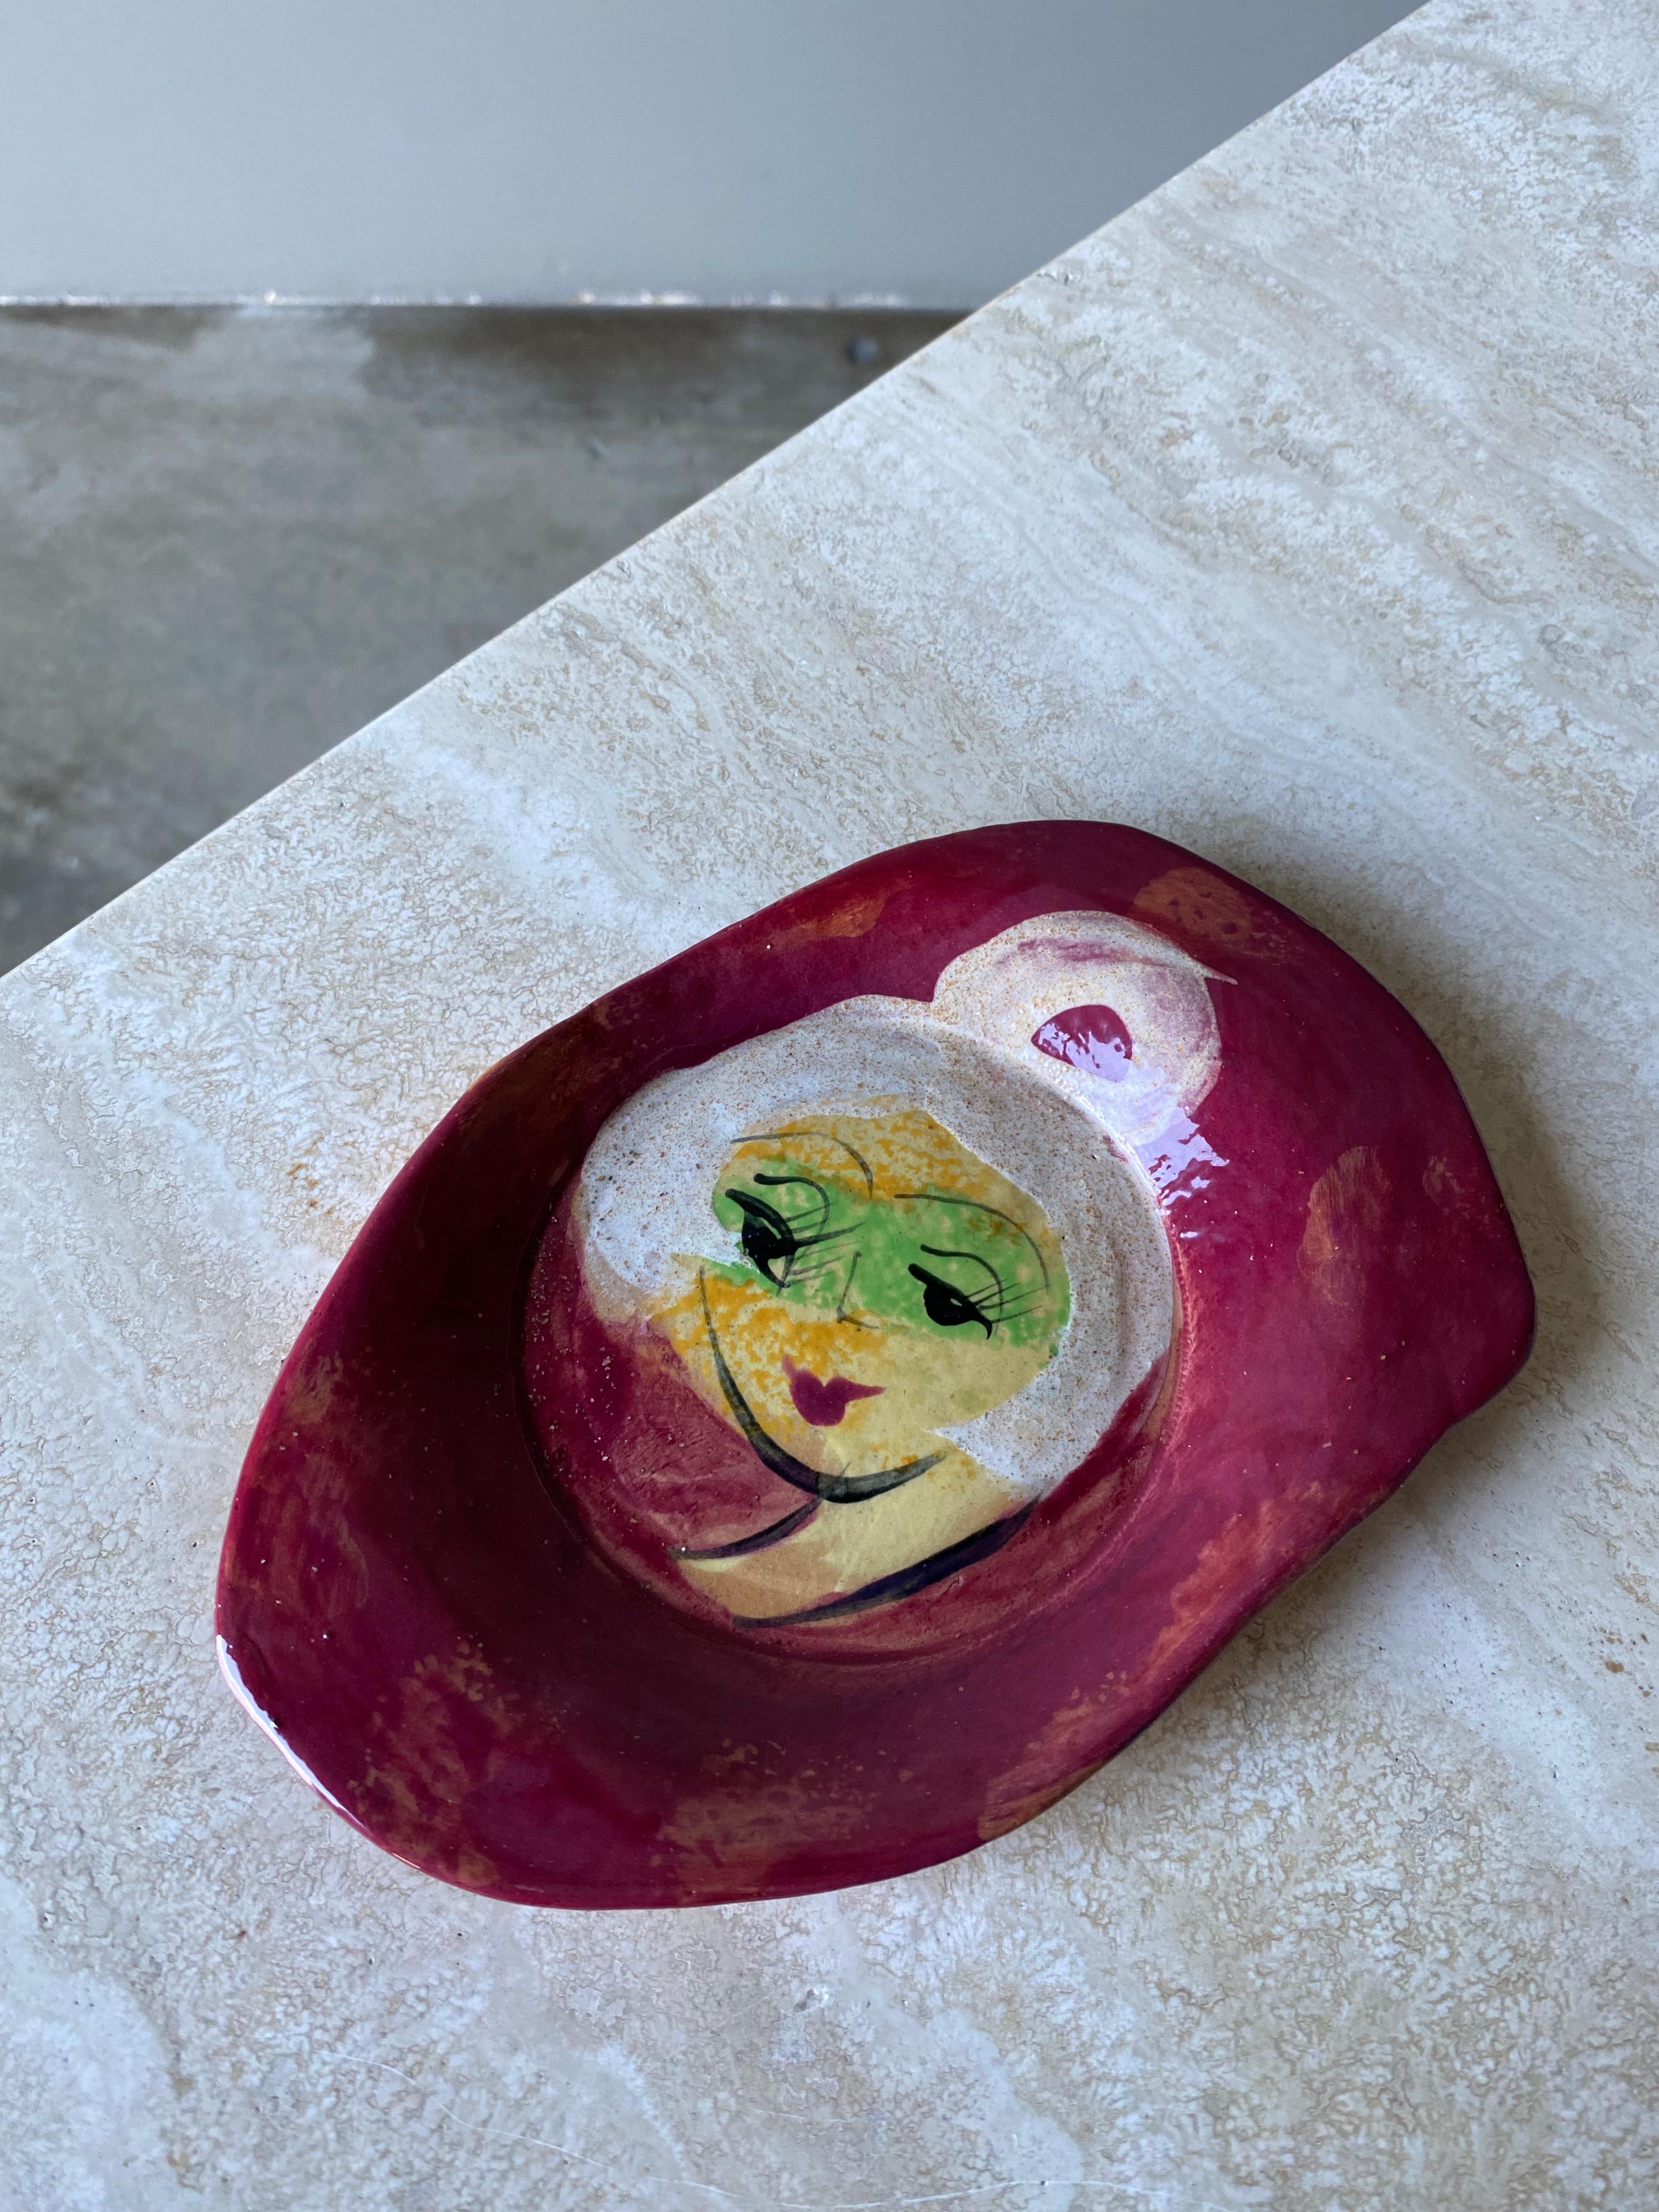 Toni Lawrence Ceramic Small Plate, 1990s. 

.